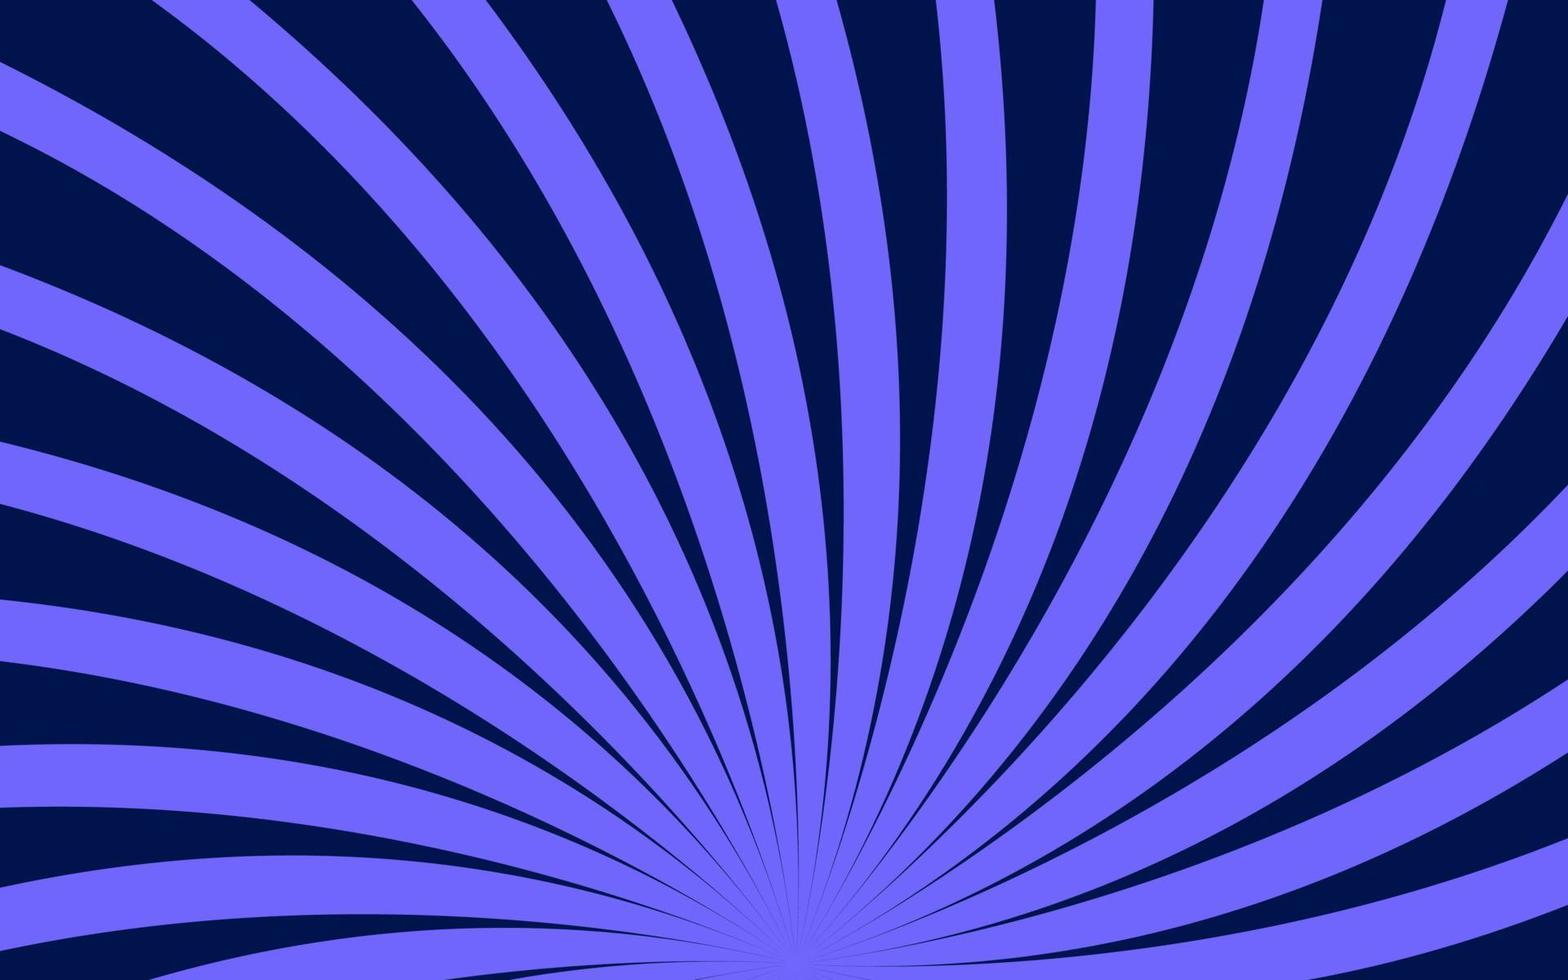 Sunburst element radial stripes  backgrounds,radial texture, Comic sunburst background design vector